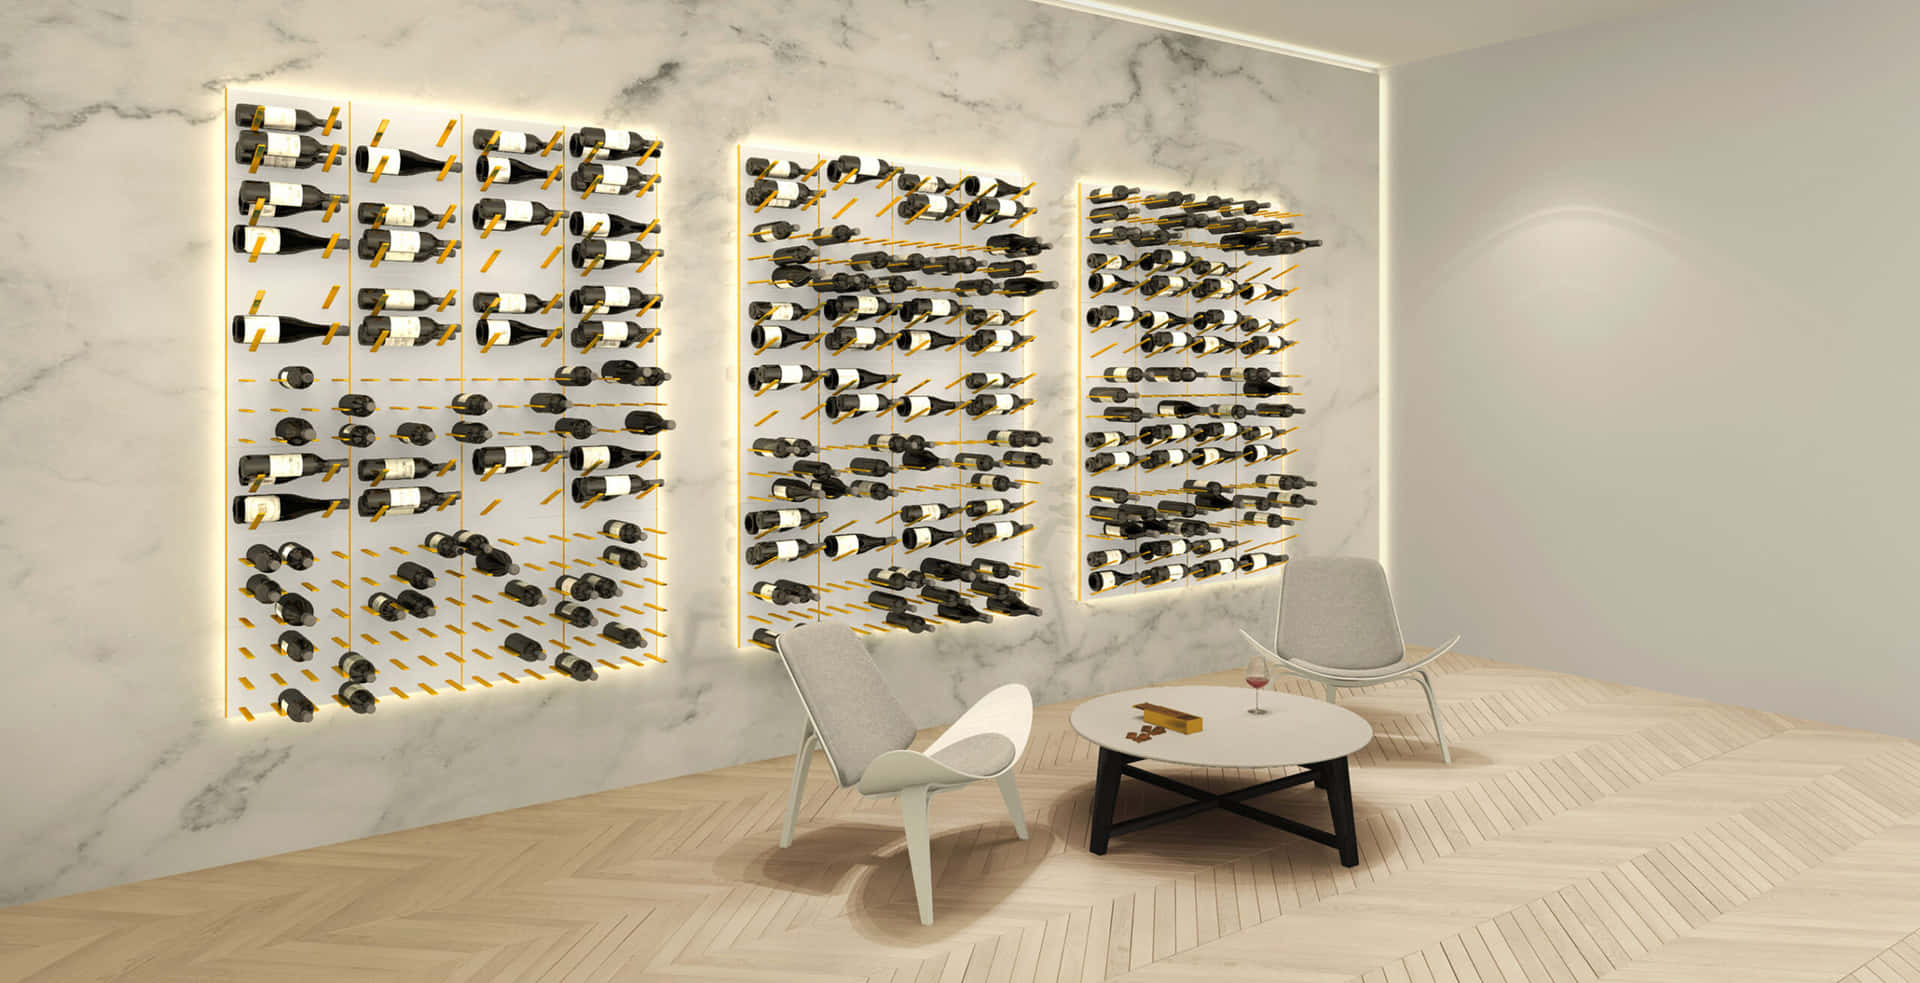 Exquisite Zesty Wine Aged in a Cellar Wallpaper